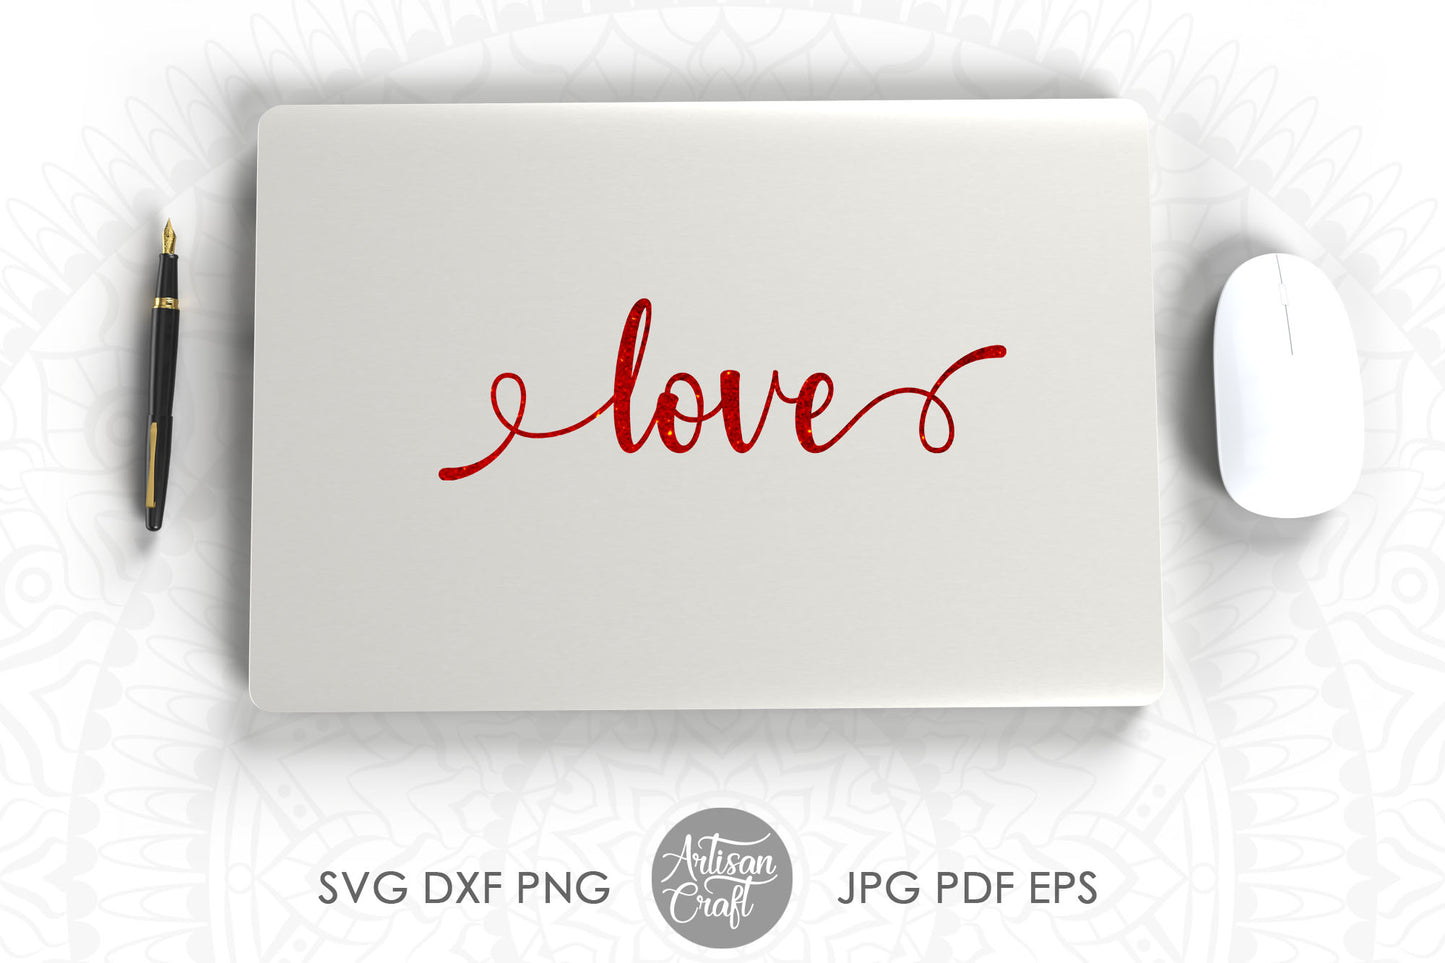 Love heart SVG